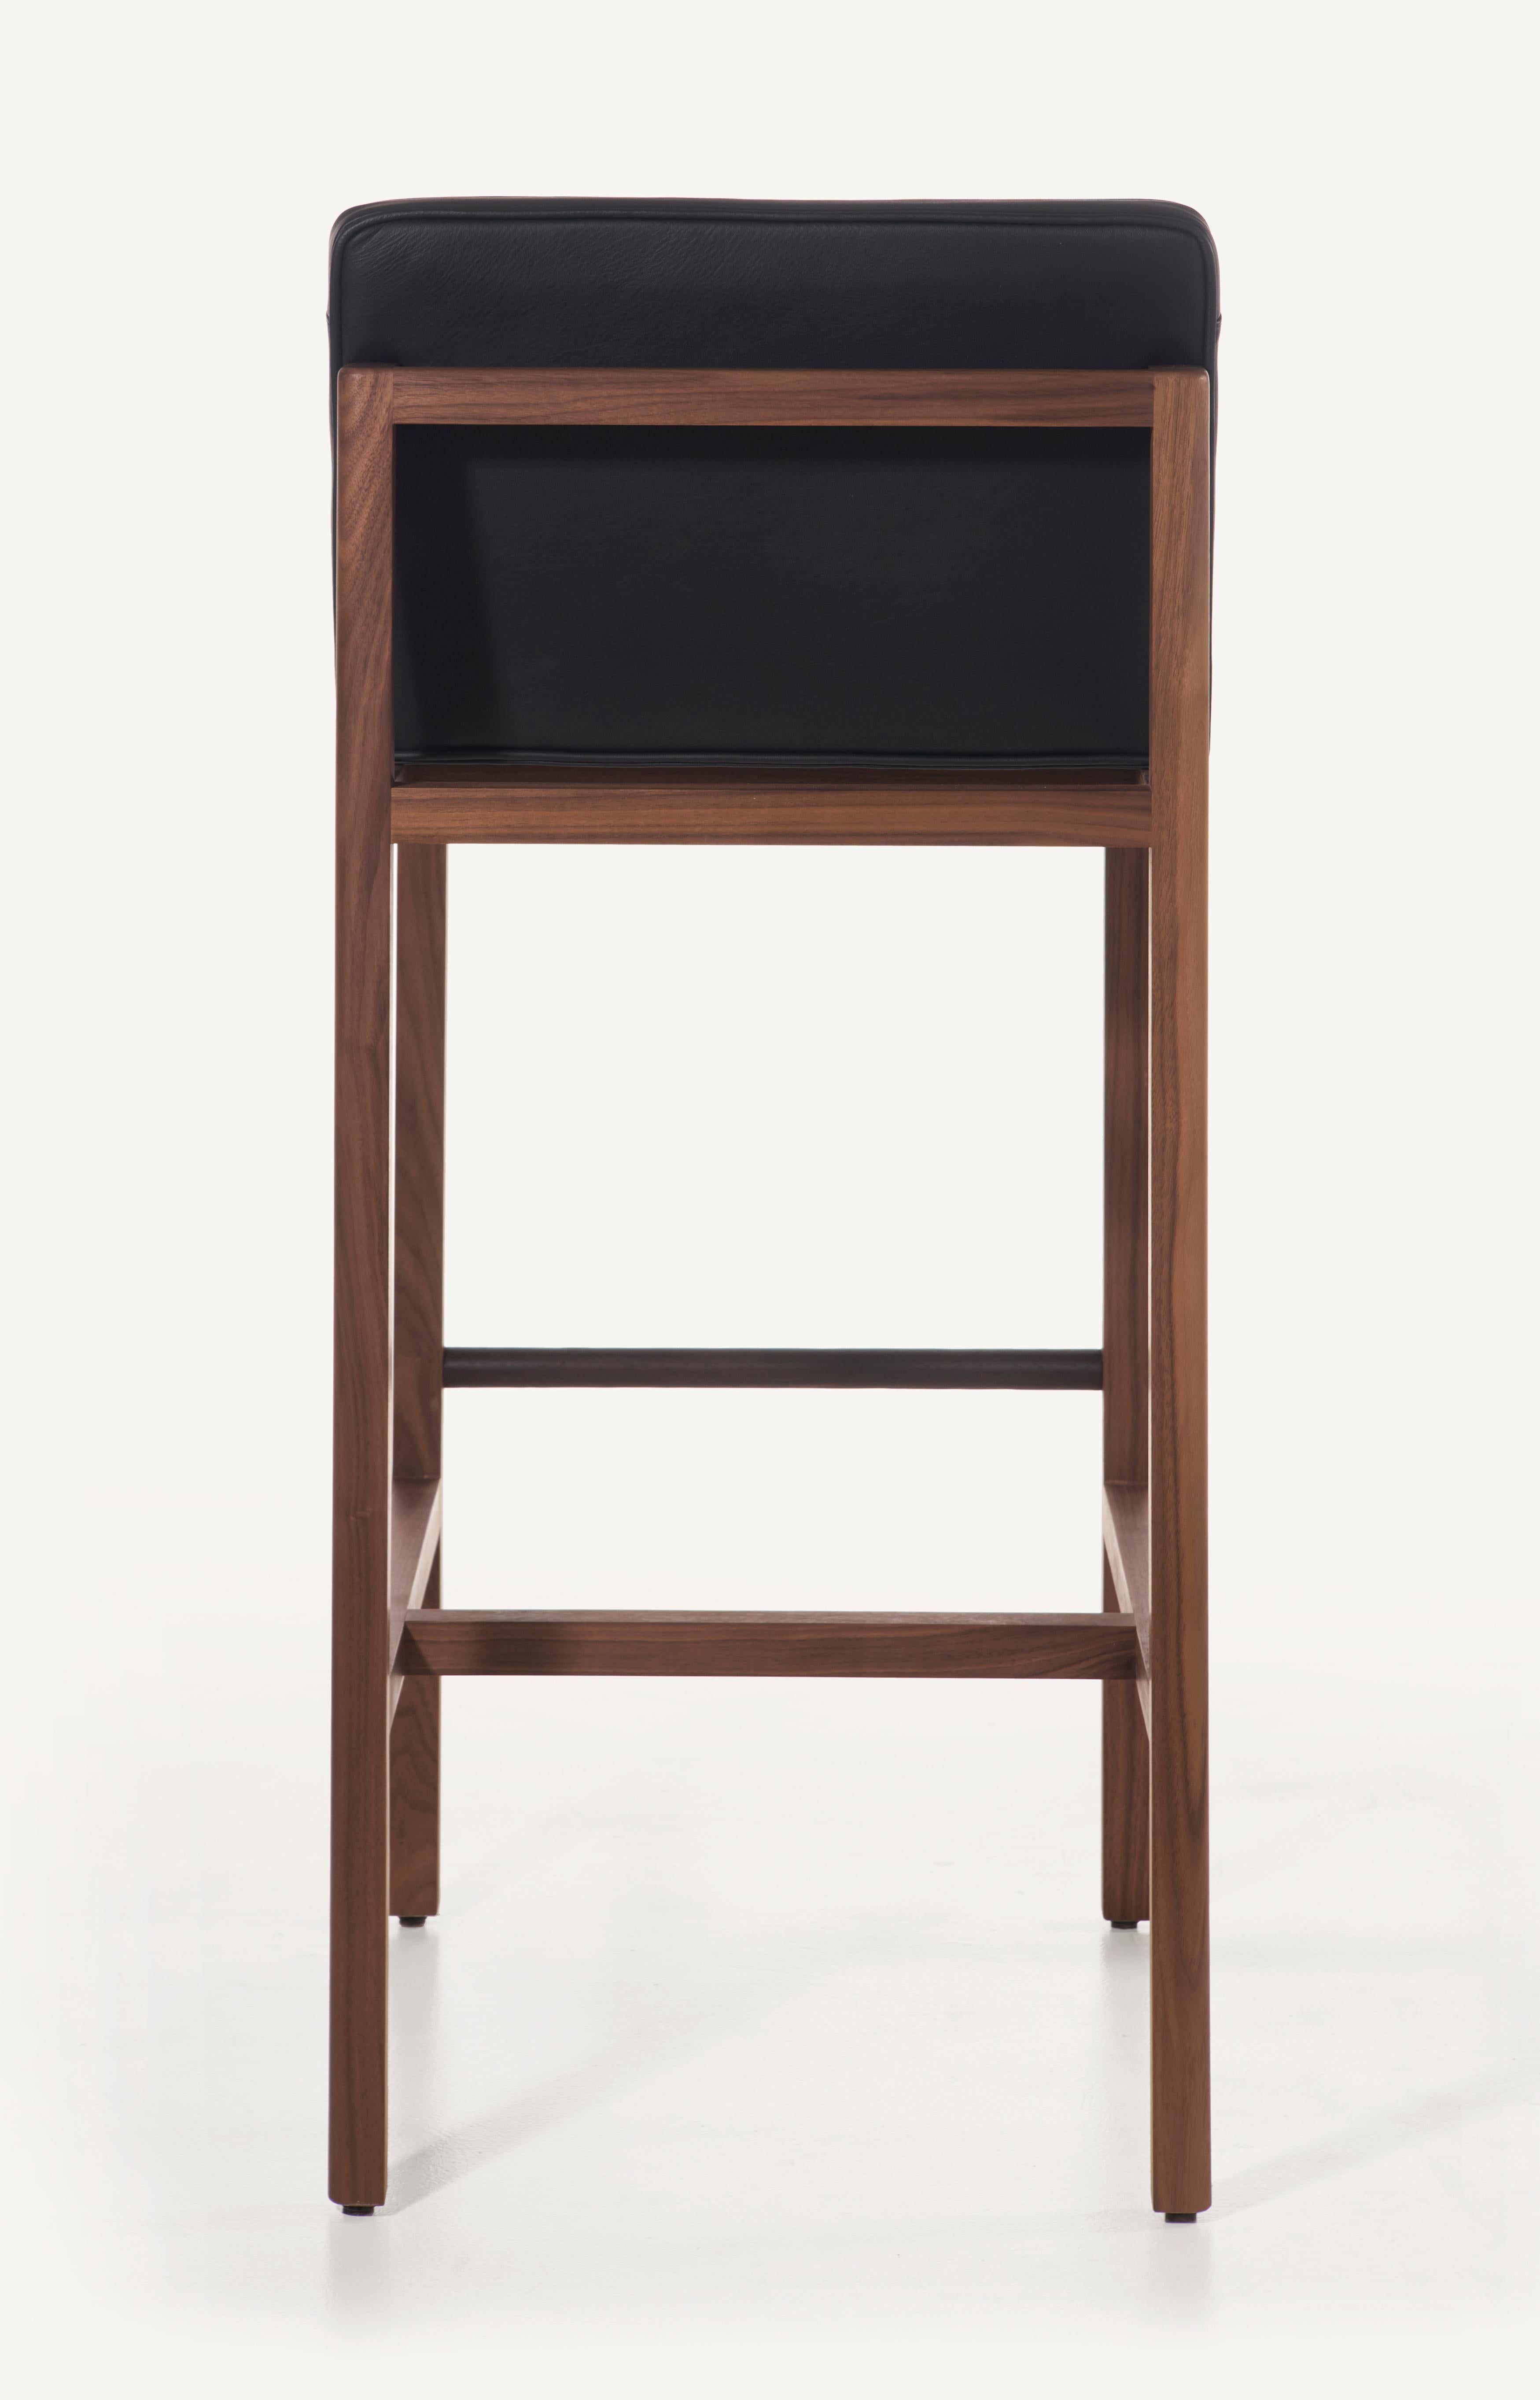 For Sale: Black (Comfort 99991 Black) Wood Frame Bar Stool in Walnut and Leather Designed by Craig Bassam 4